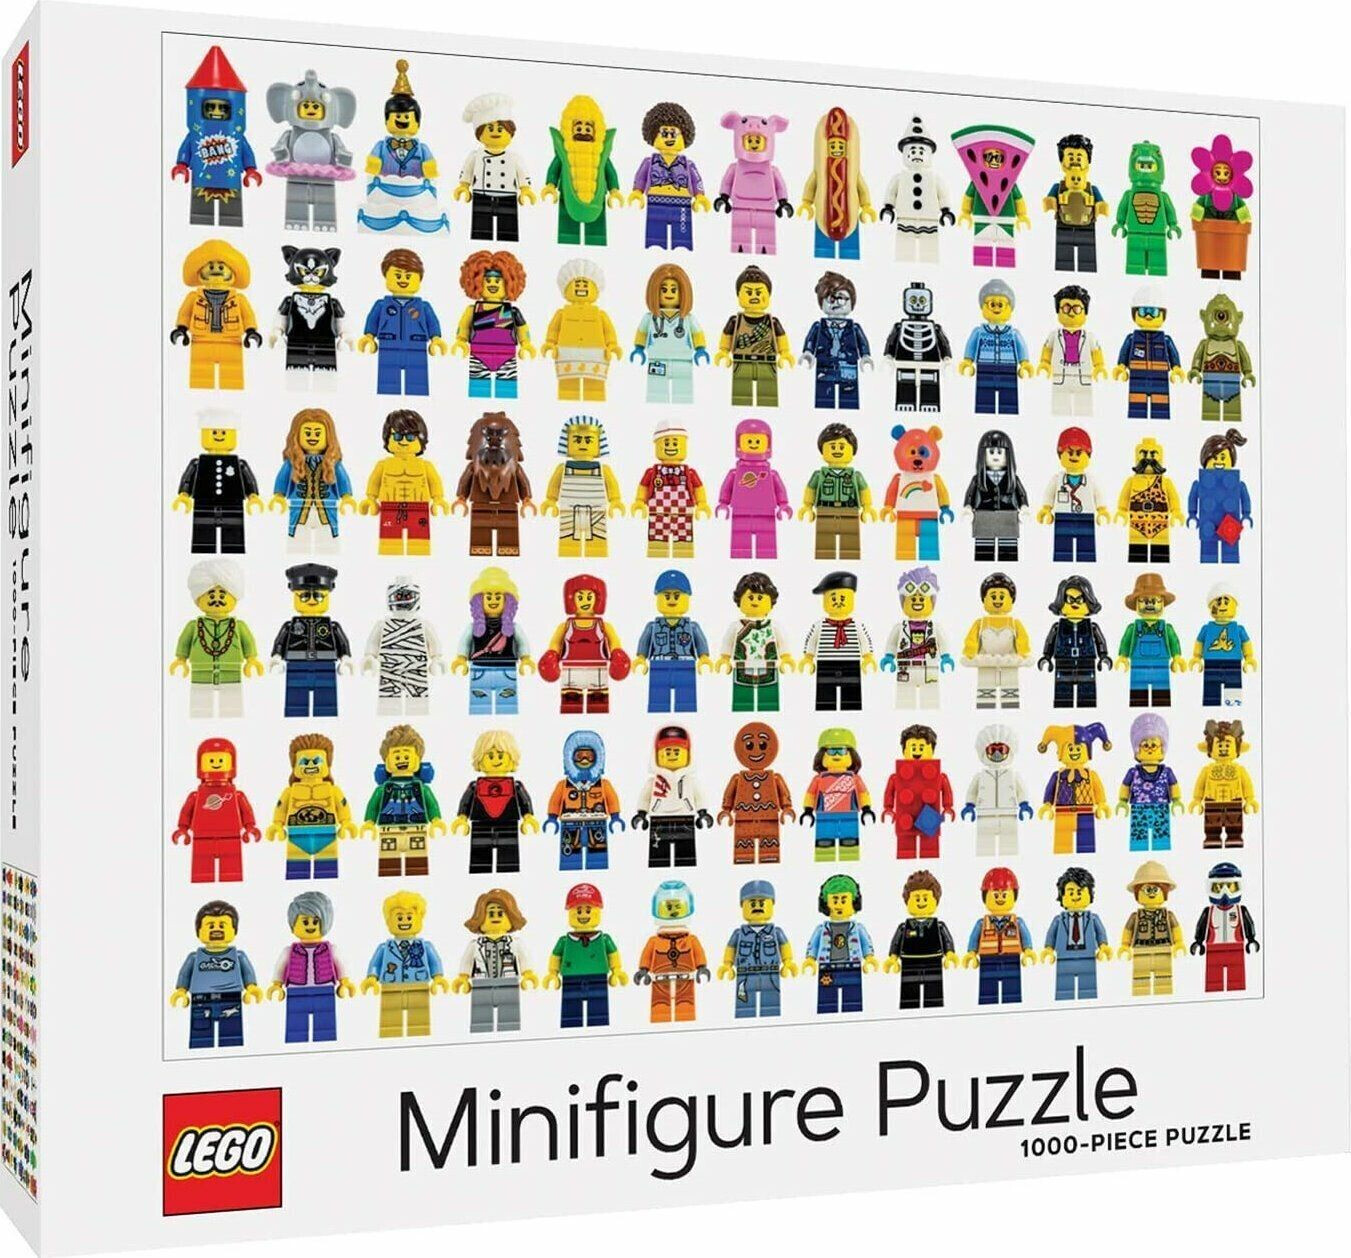 Photos - Jigsaw Puzzle / Mosaic Lego 4521 